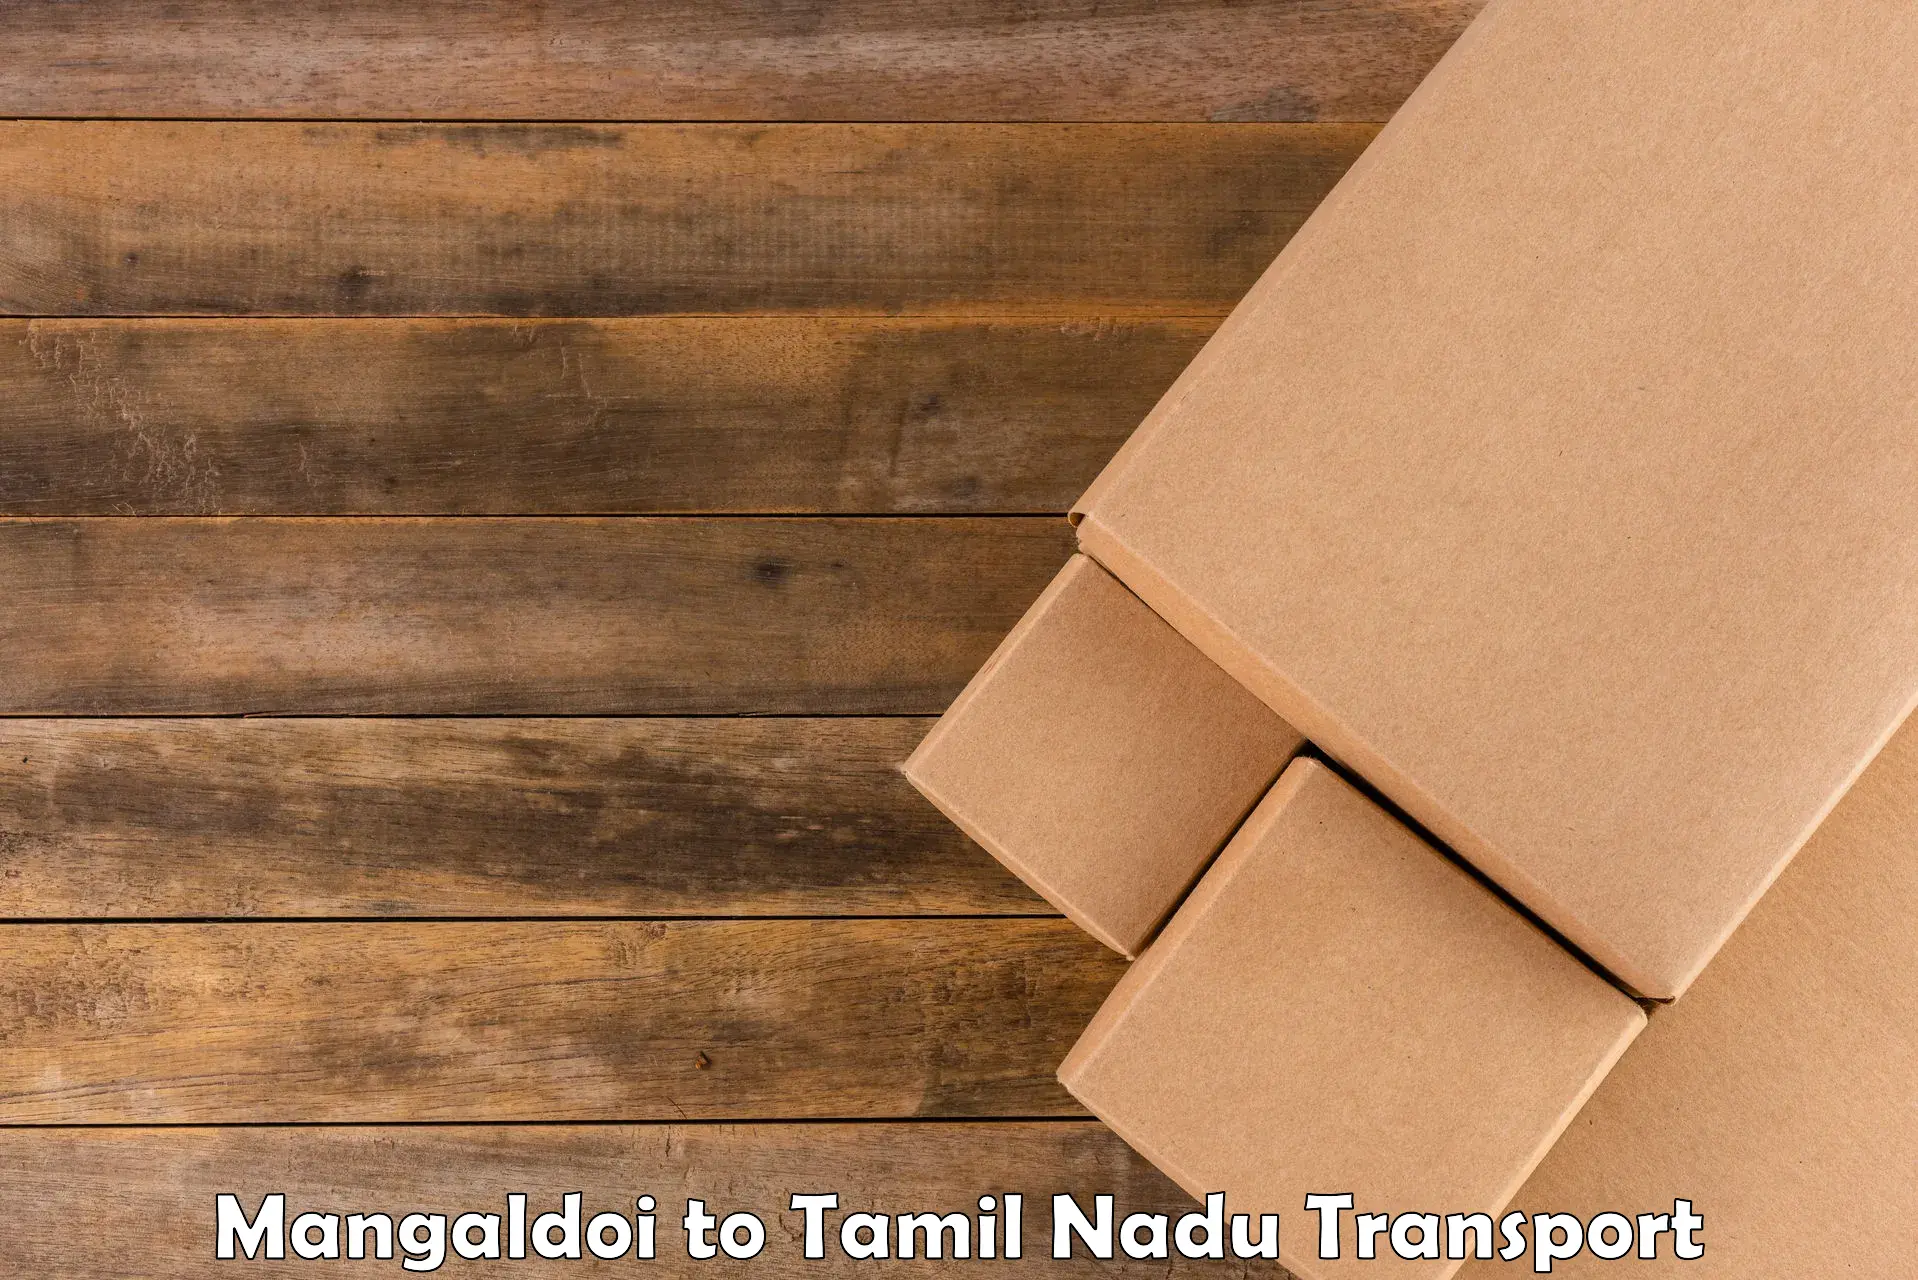 Lorry transport service Mangaldoi to Ennore Port Chennai